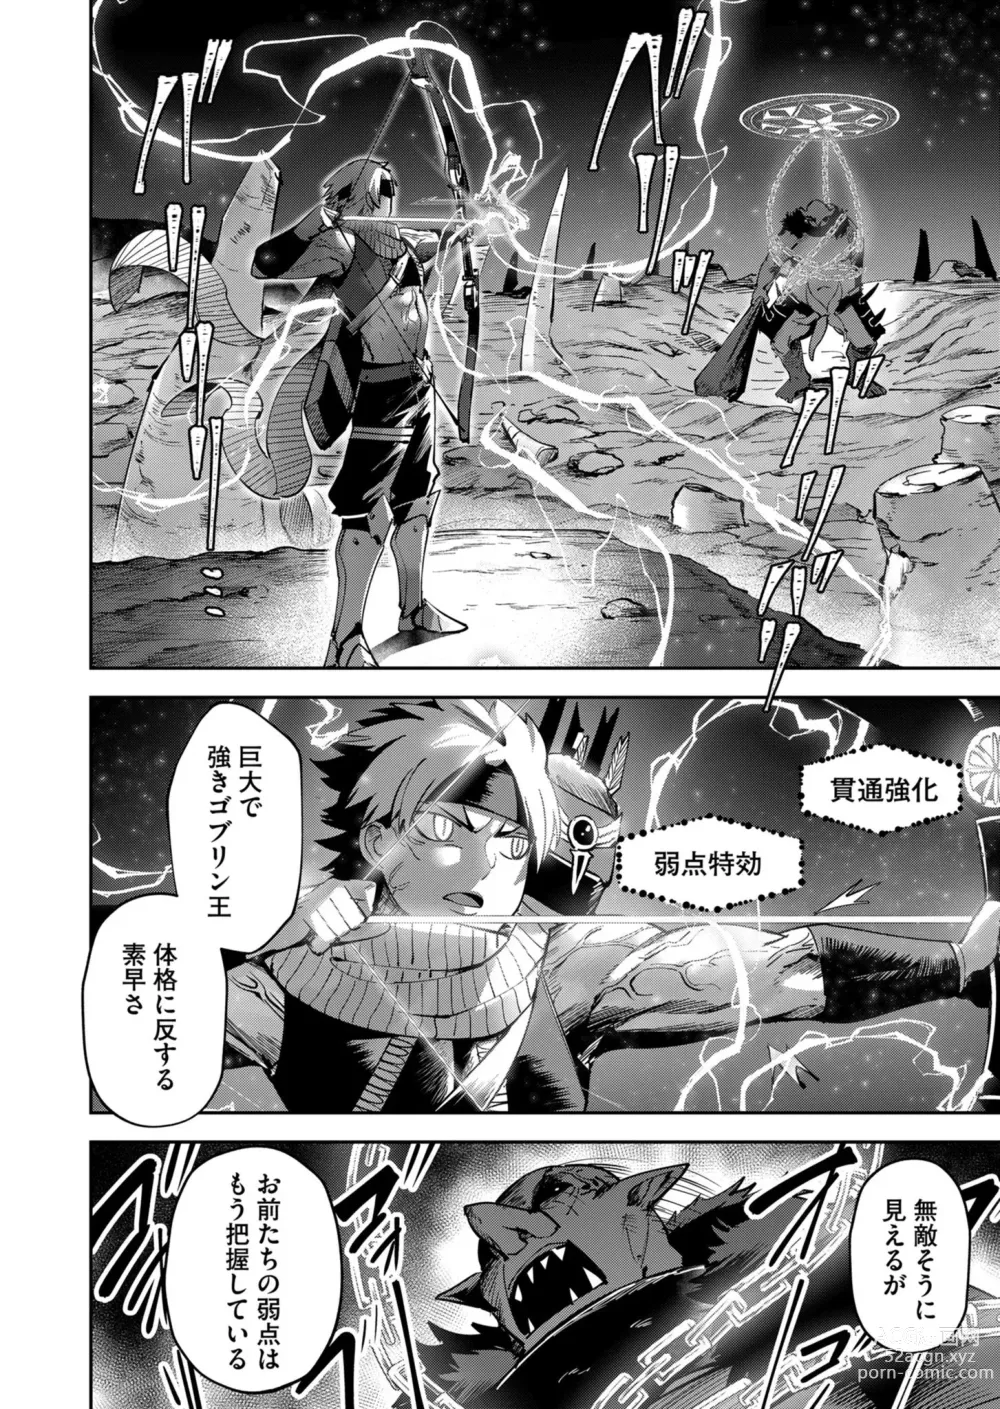 Page 154 of manga Kichiku Eiyuu Vol.03